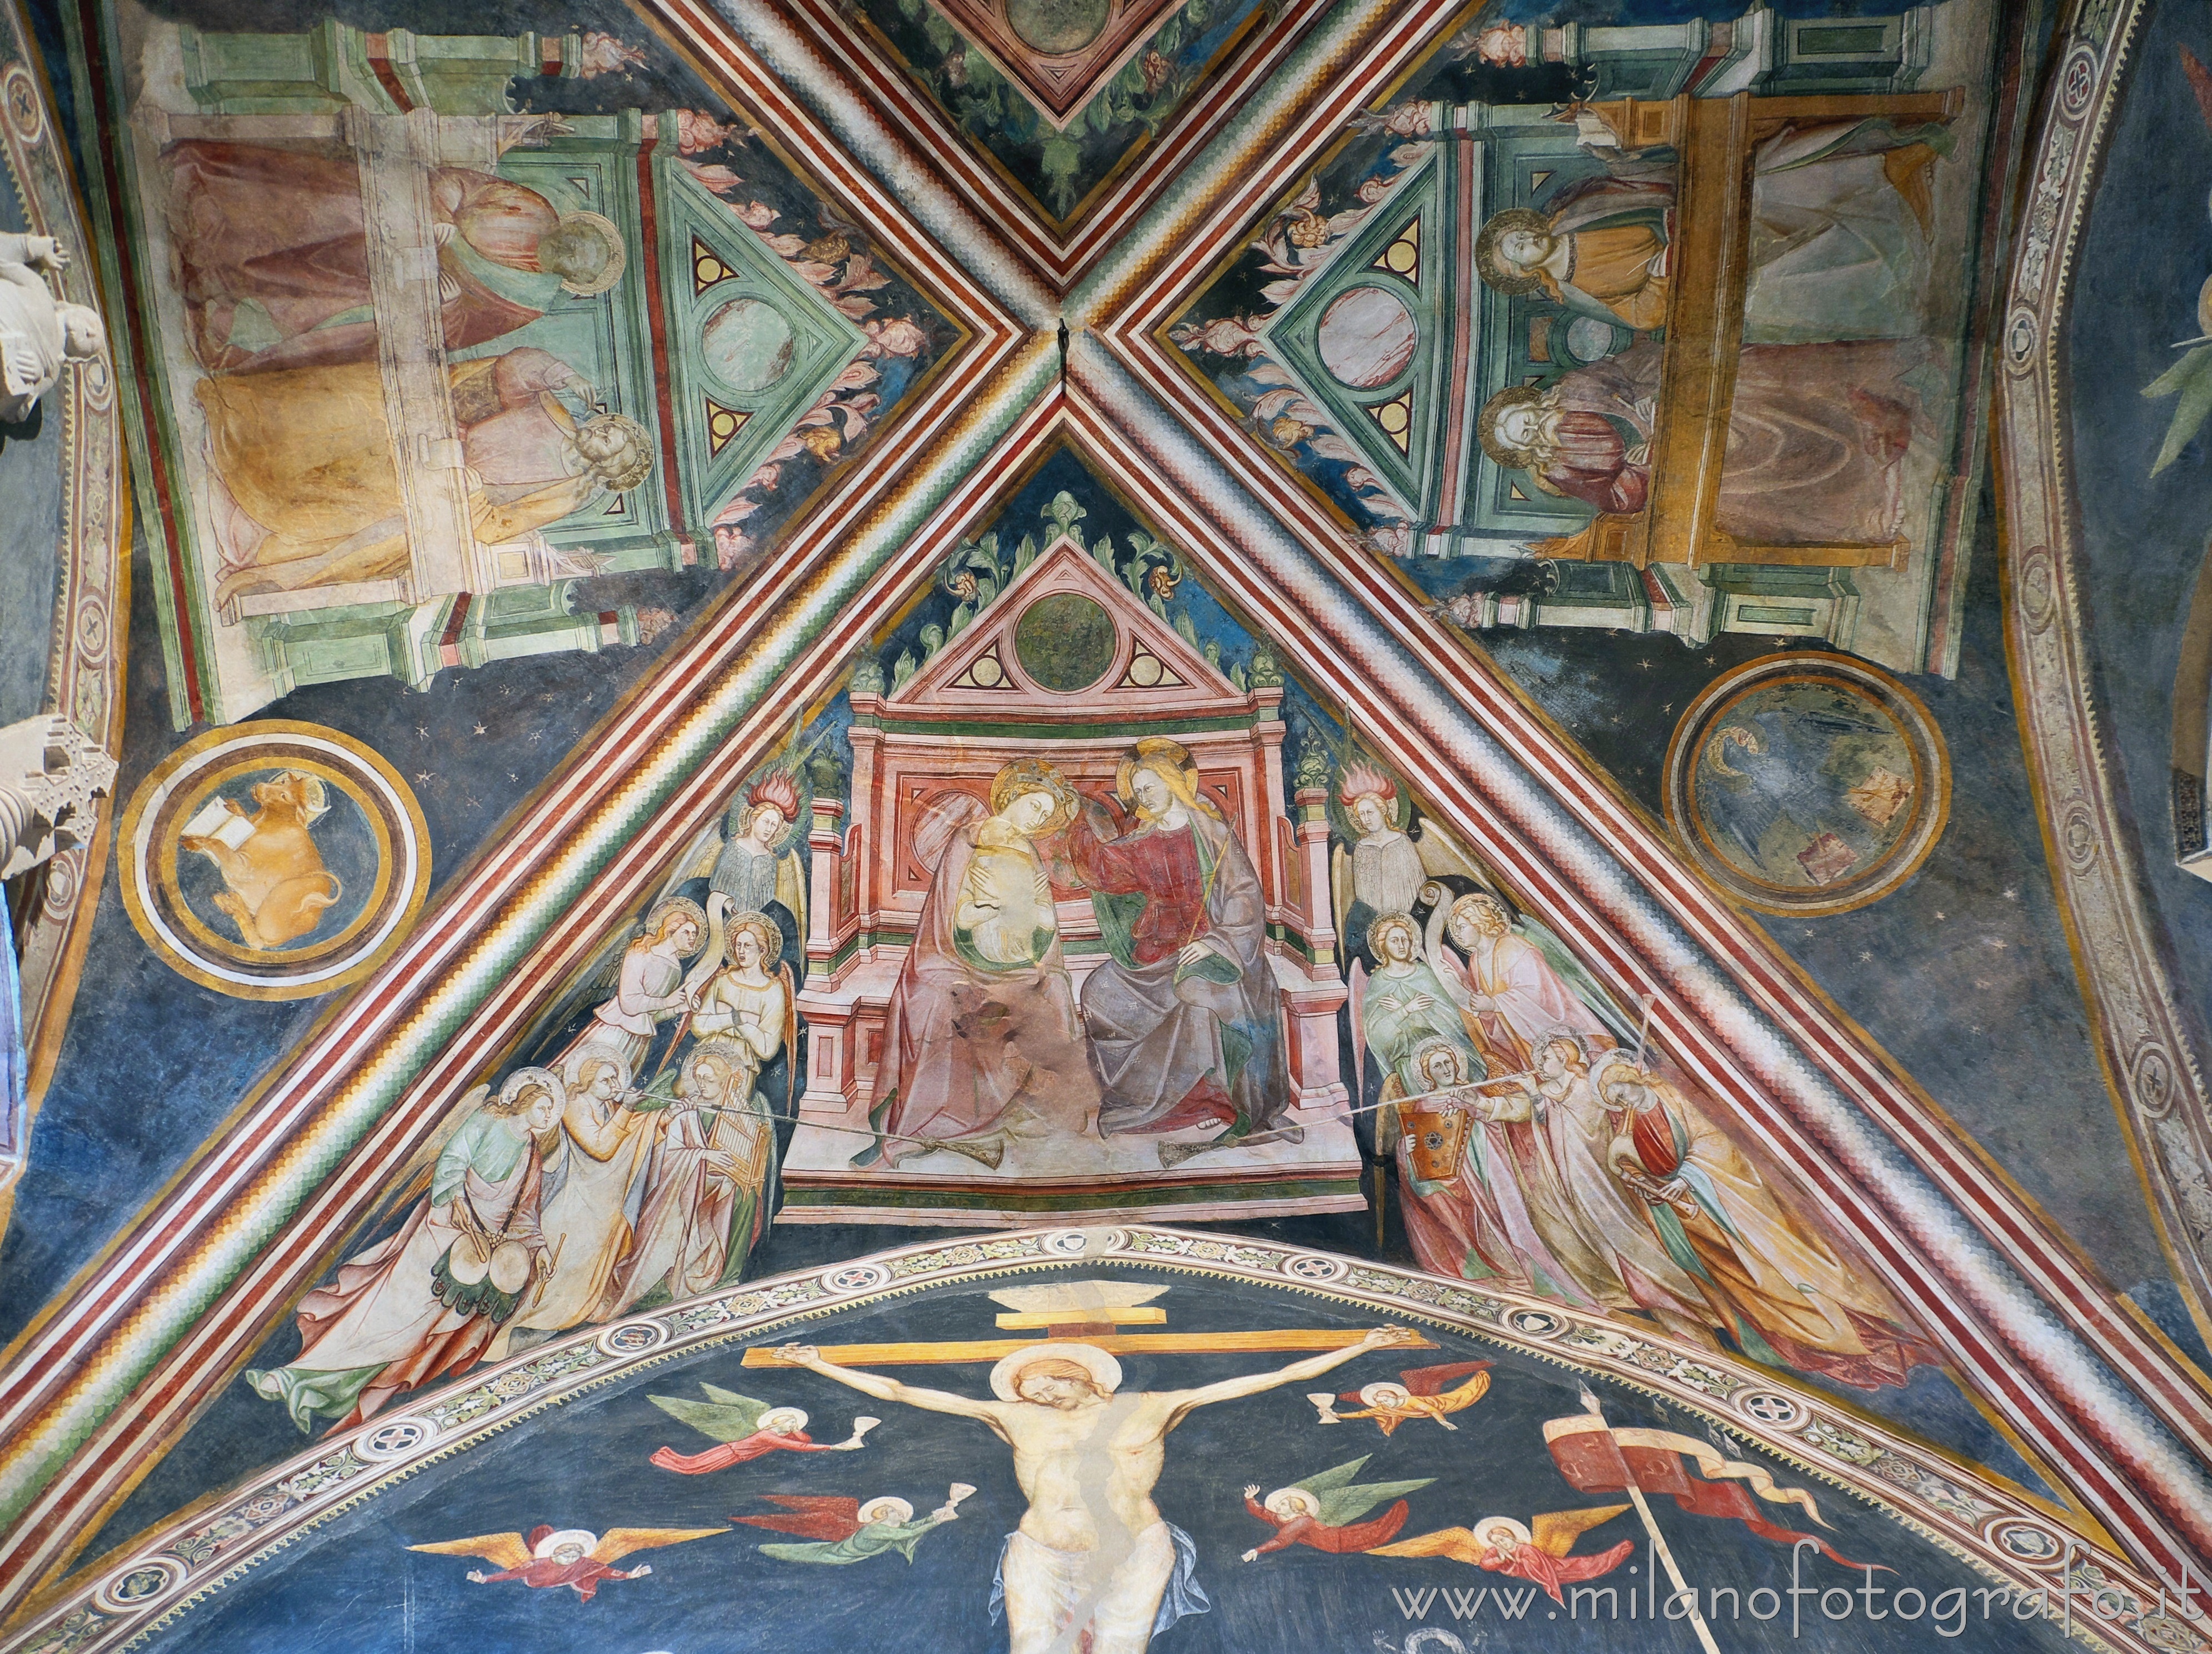 Lentate sul Seveso (Monza e Brianza, Italy): Frescos on the vault of aps of the Oratory of Santo Stefano - Lentate sul Seveso (Monza e Brianza, Italy)